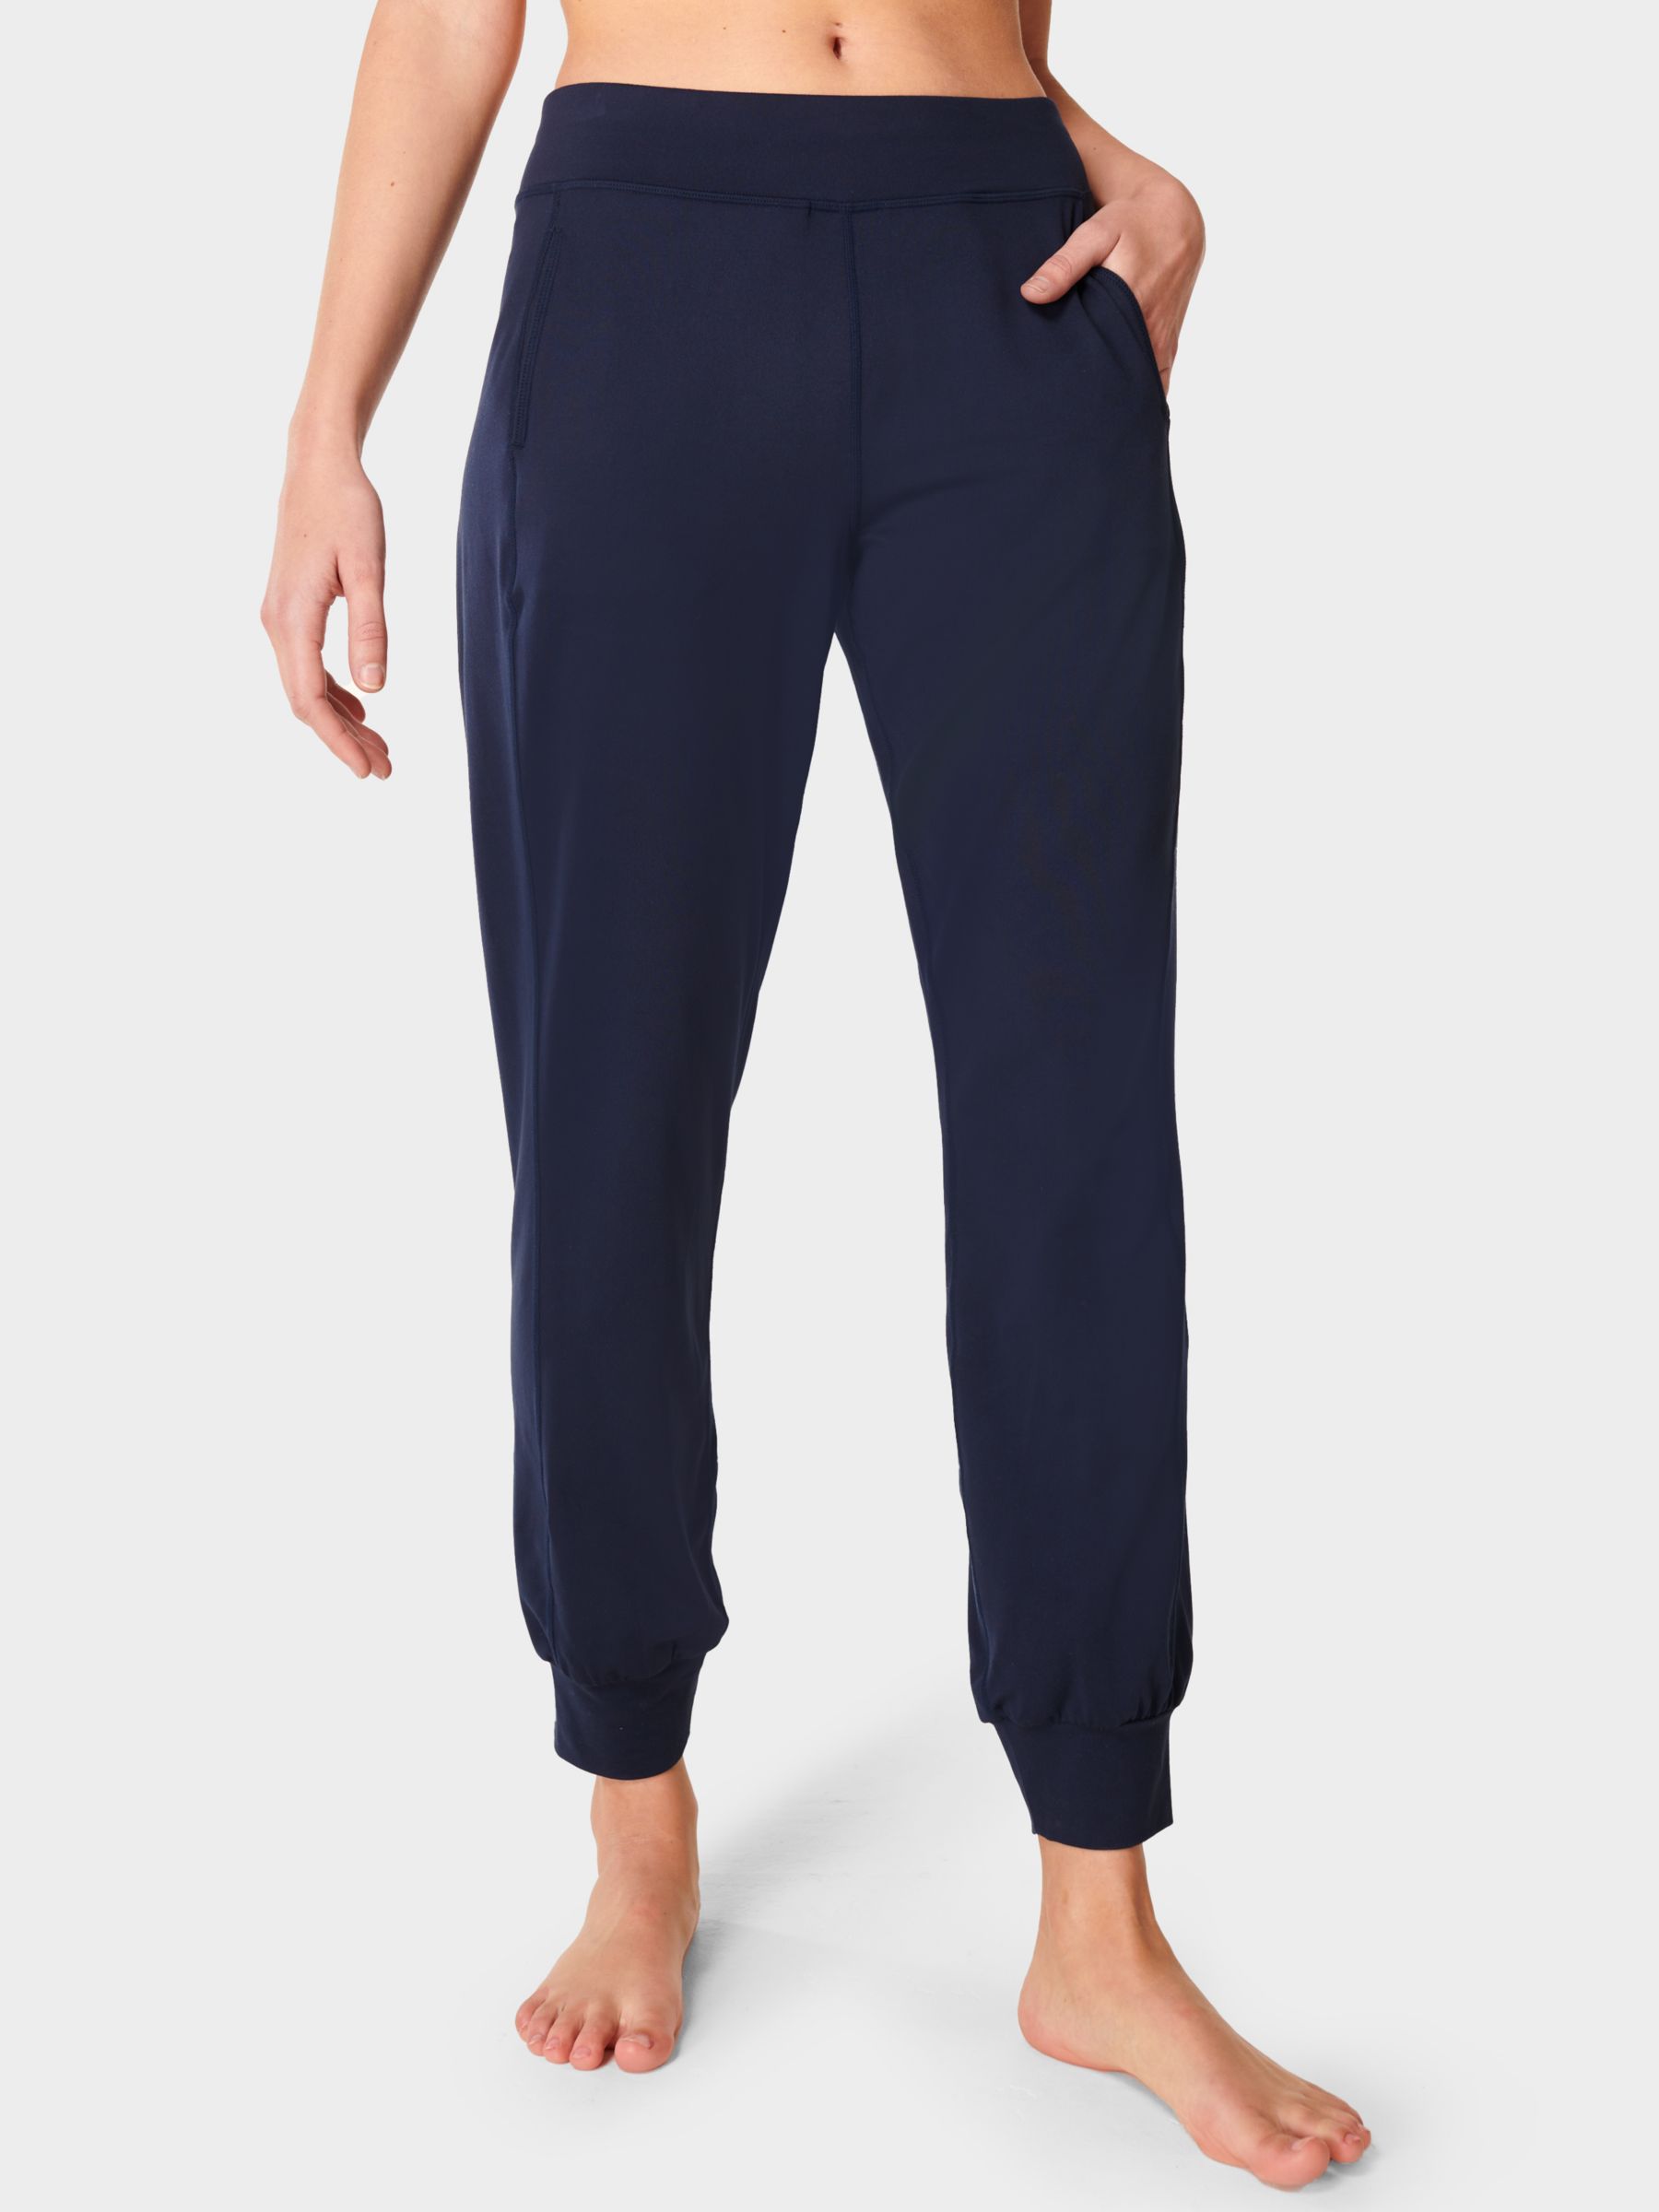 Sweaty Betty Gary 27 Yoga Pants, Navy, XXS